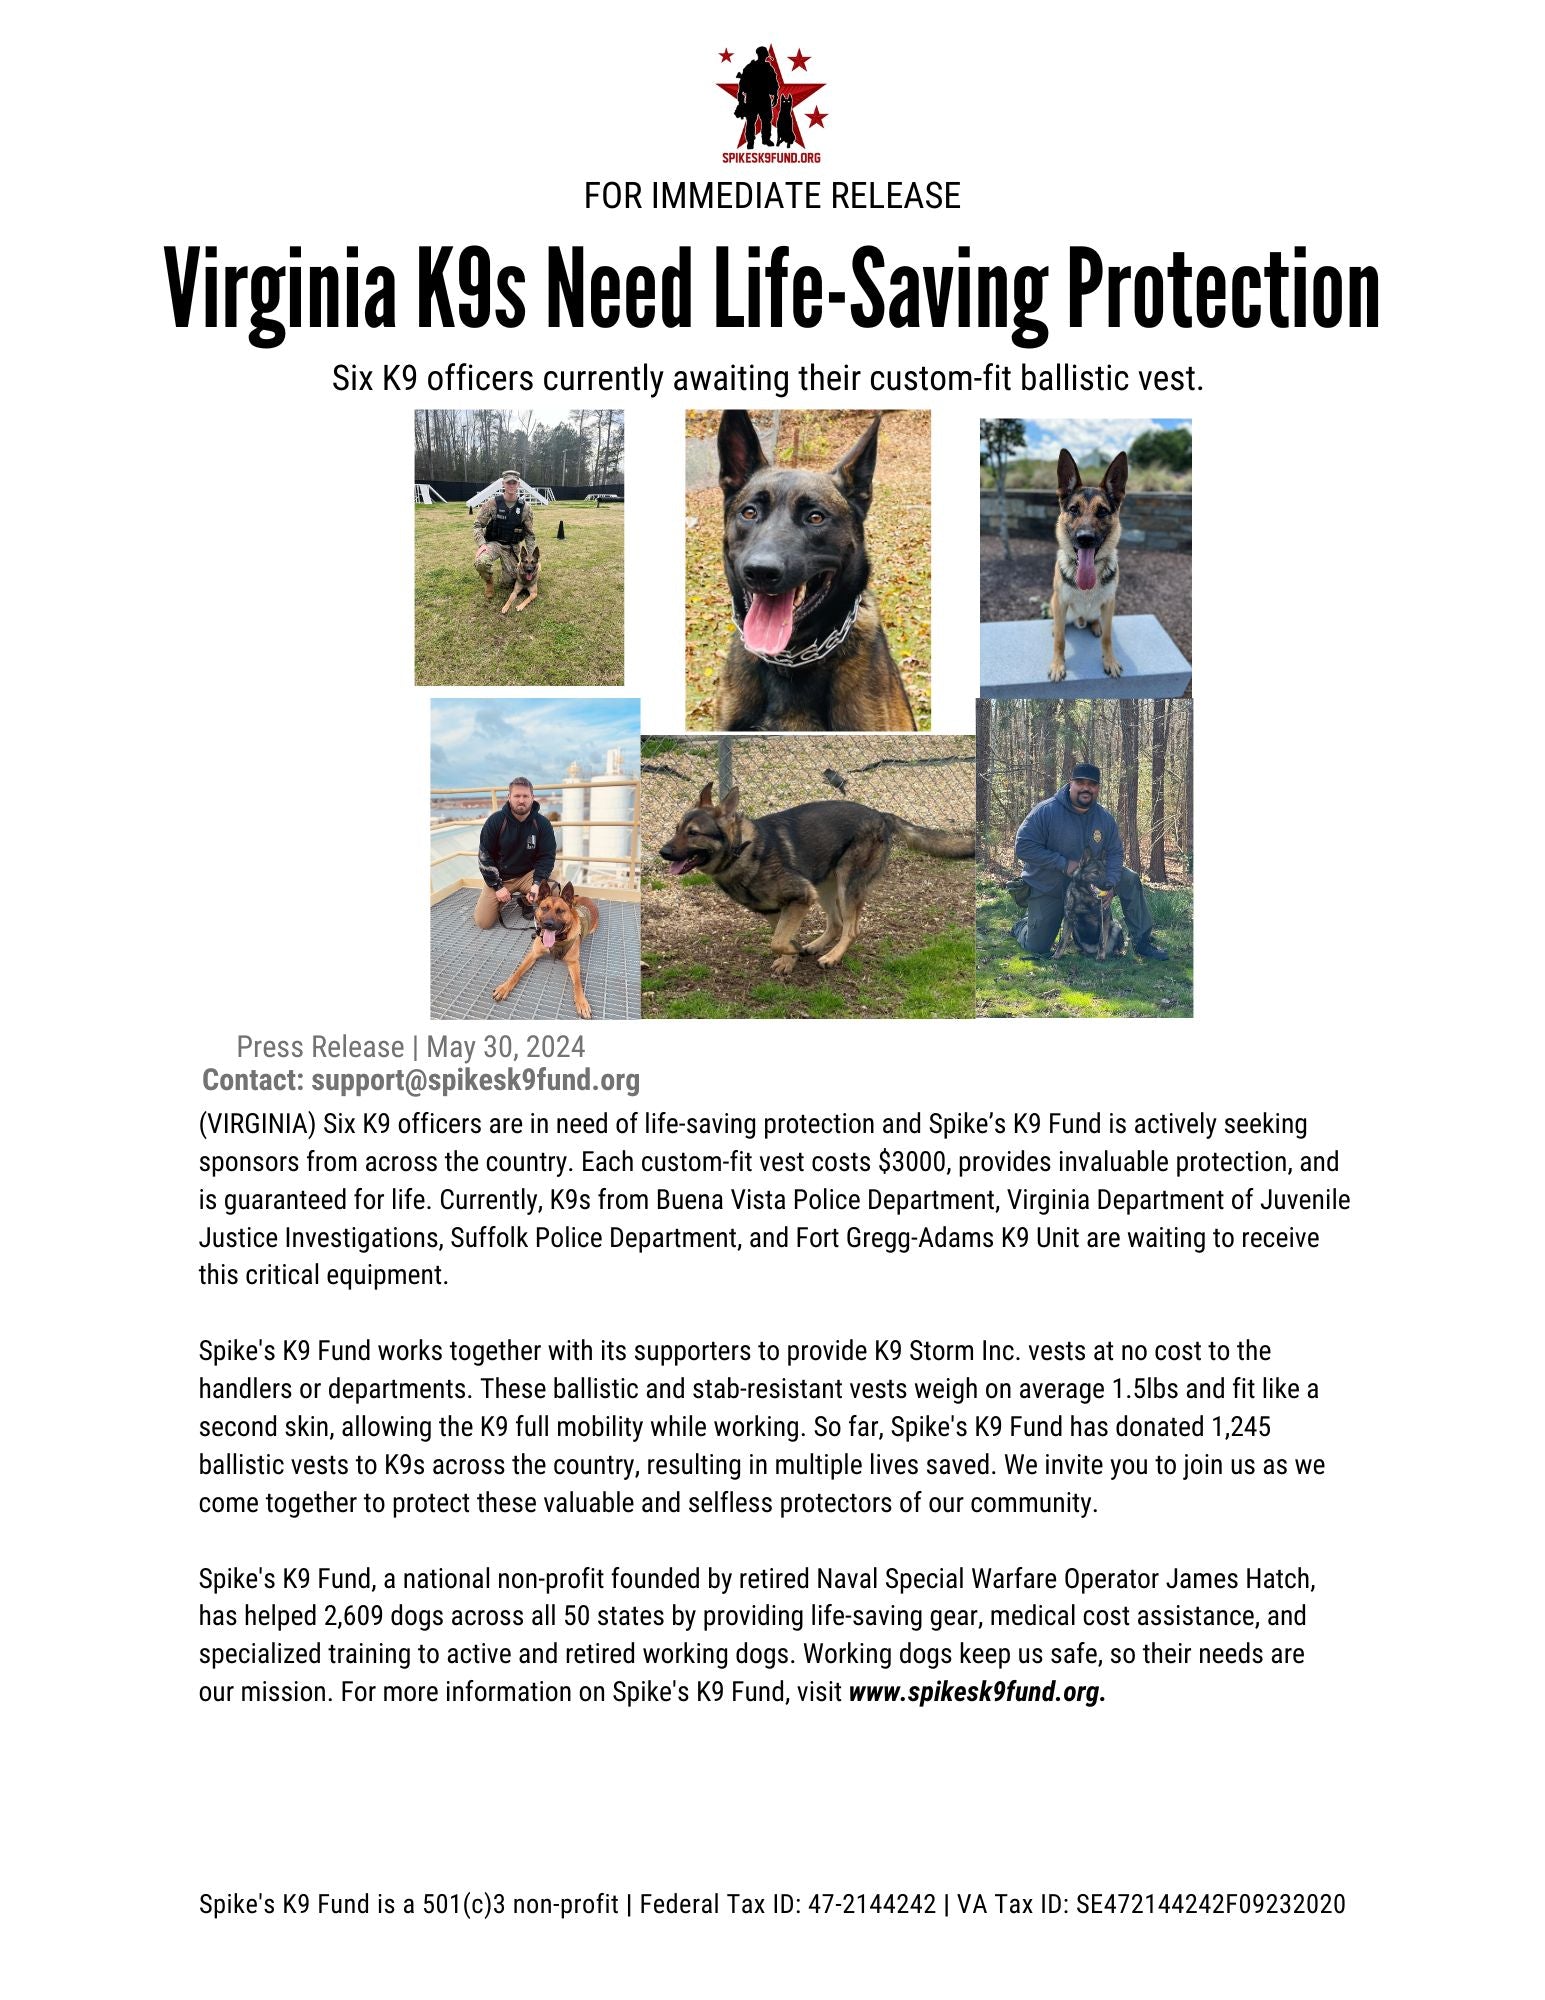 Virginia K9s Need Life-Saving Protection